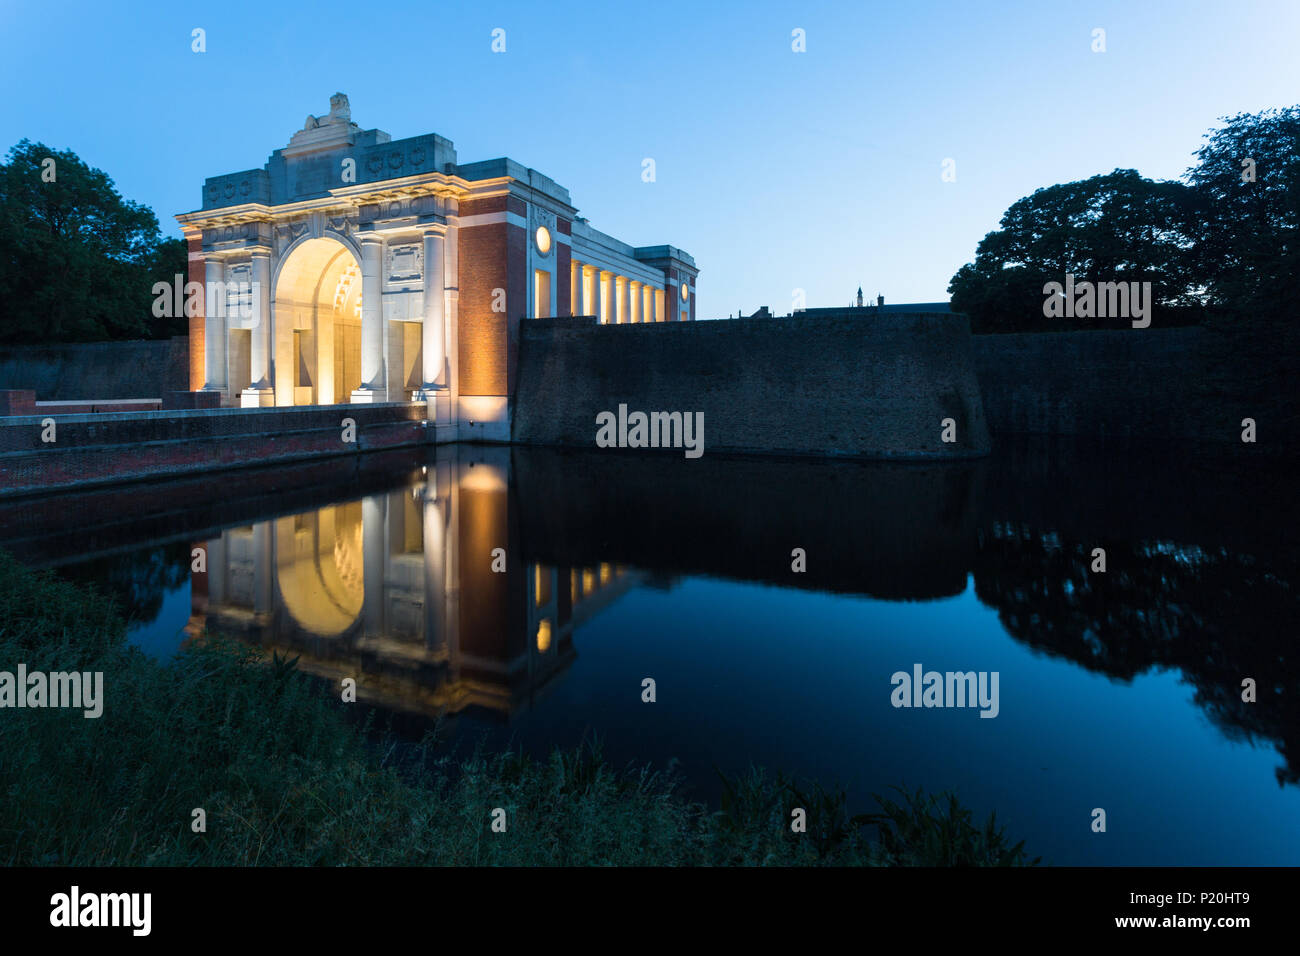 Porte de Menin, Ypres, Belgique lit up at night Banque D'Images